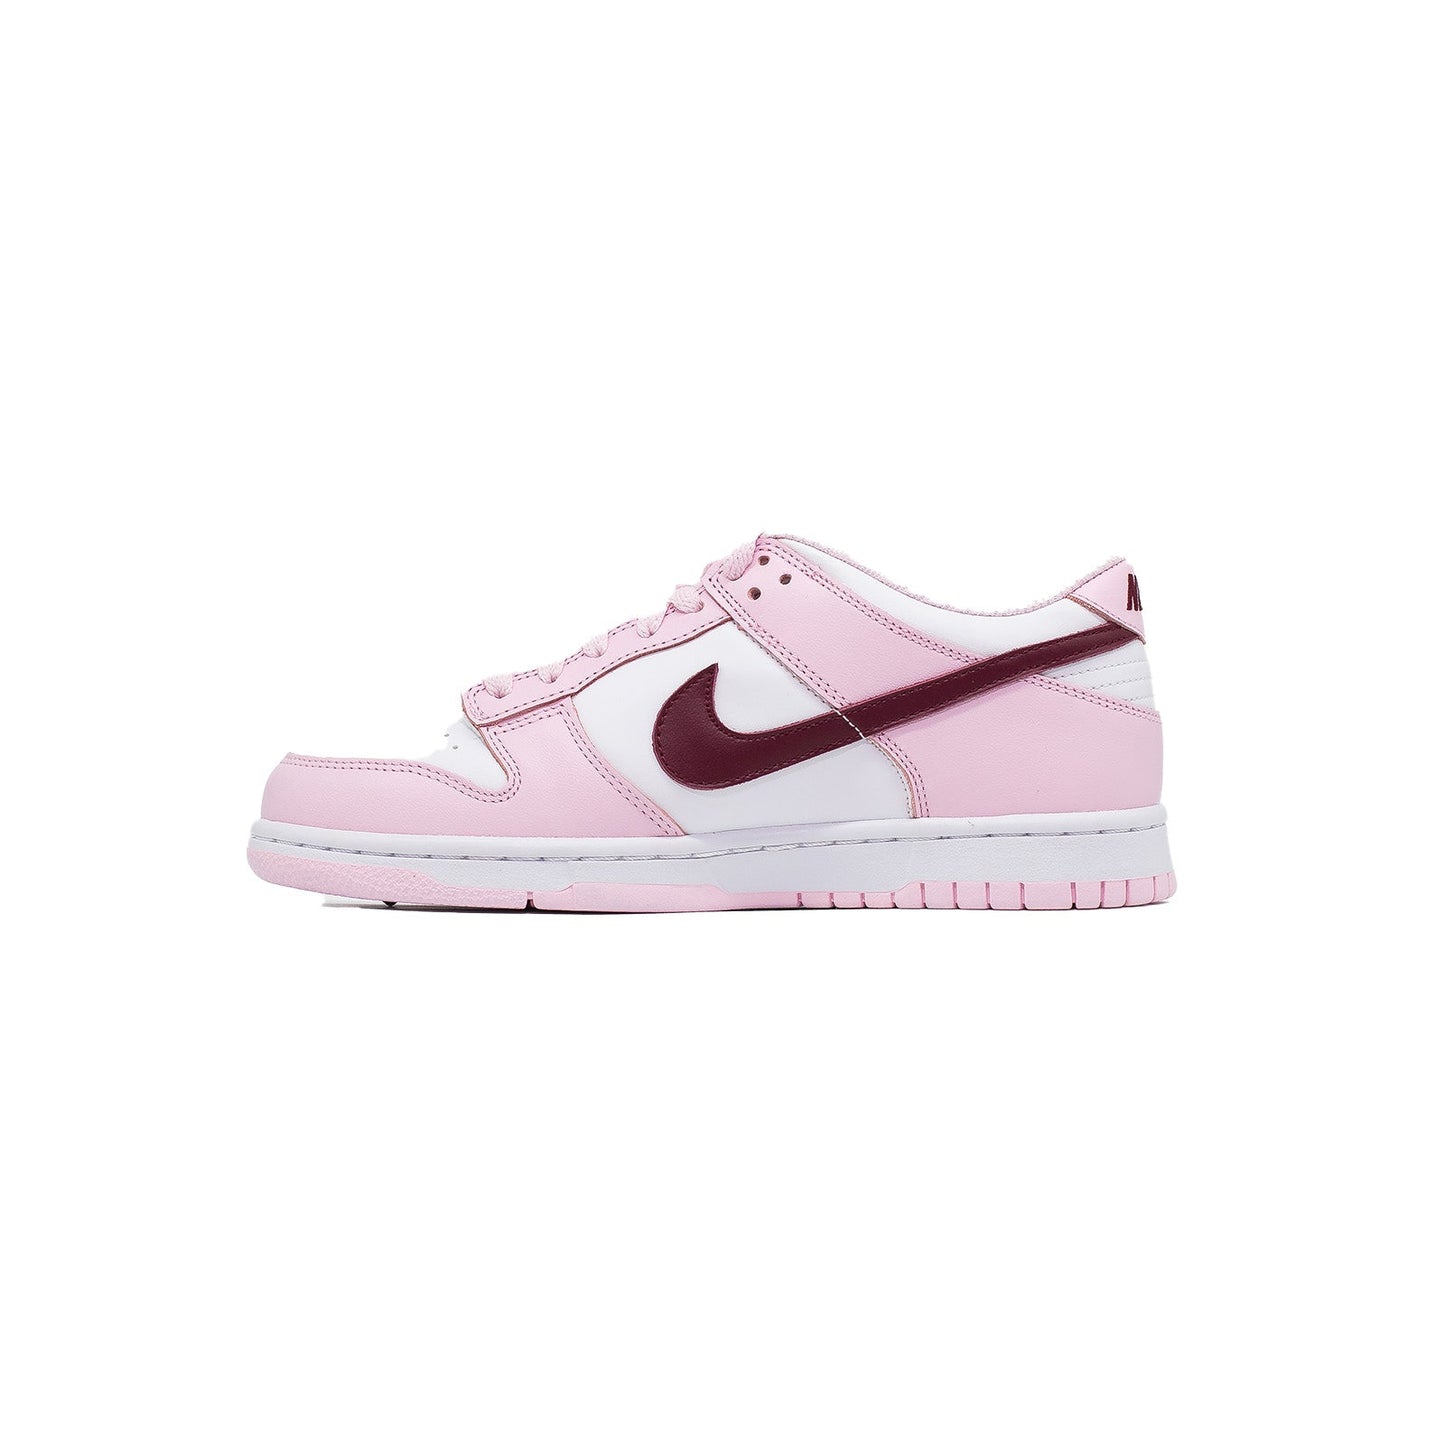 NikeDunkLow GS PinkFoam2 1445x